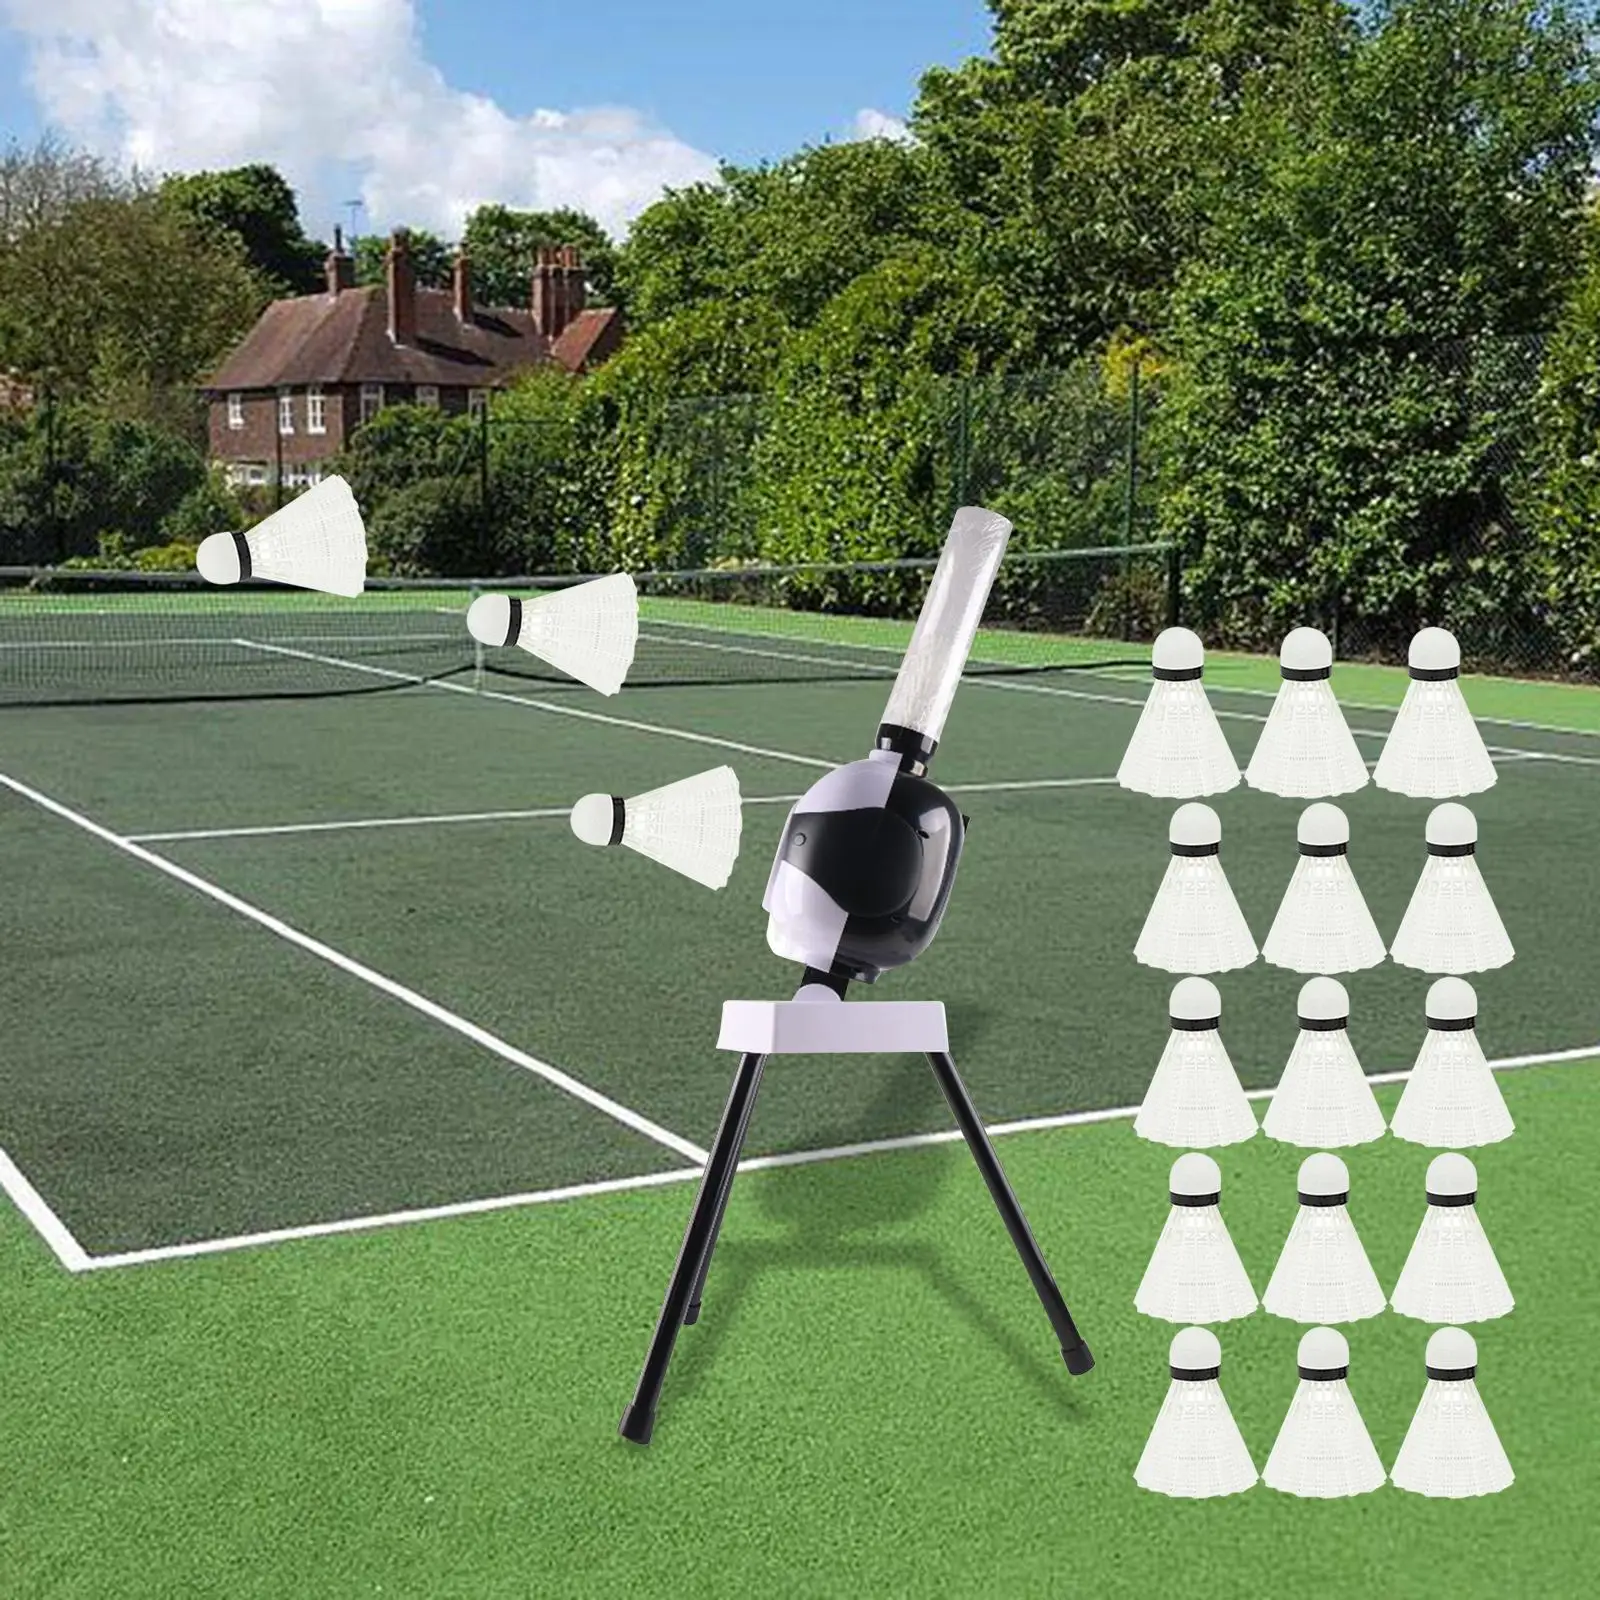 Automatic Badminton Serve Machine Badminton Ball Tosser Badminton Trainer for Kids